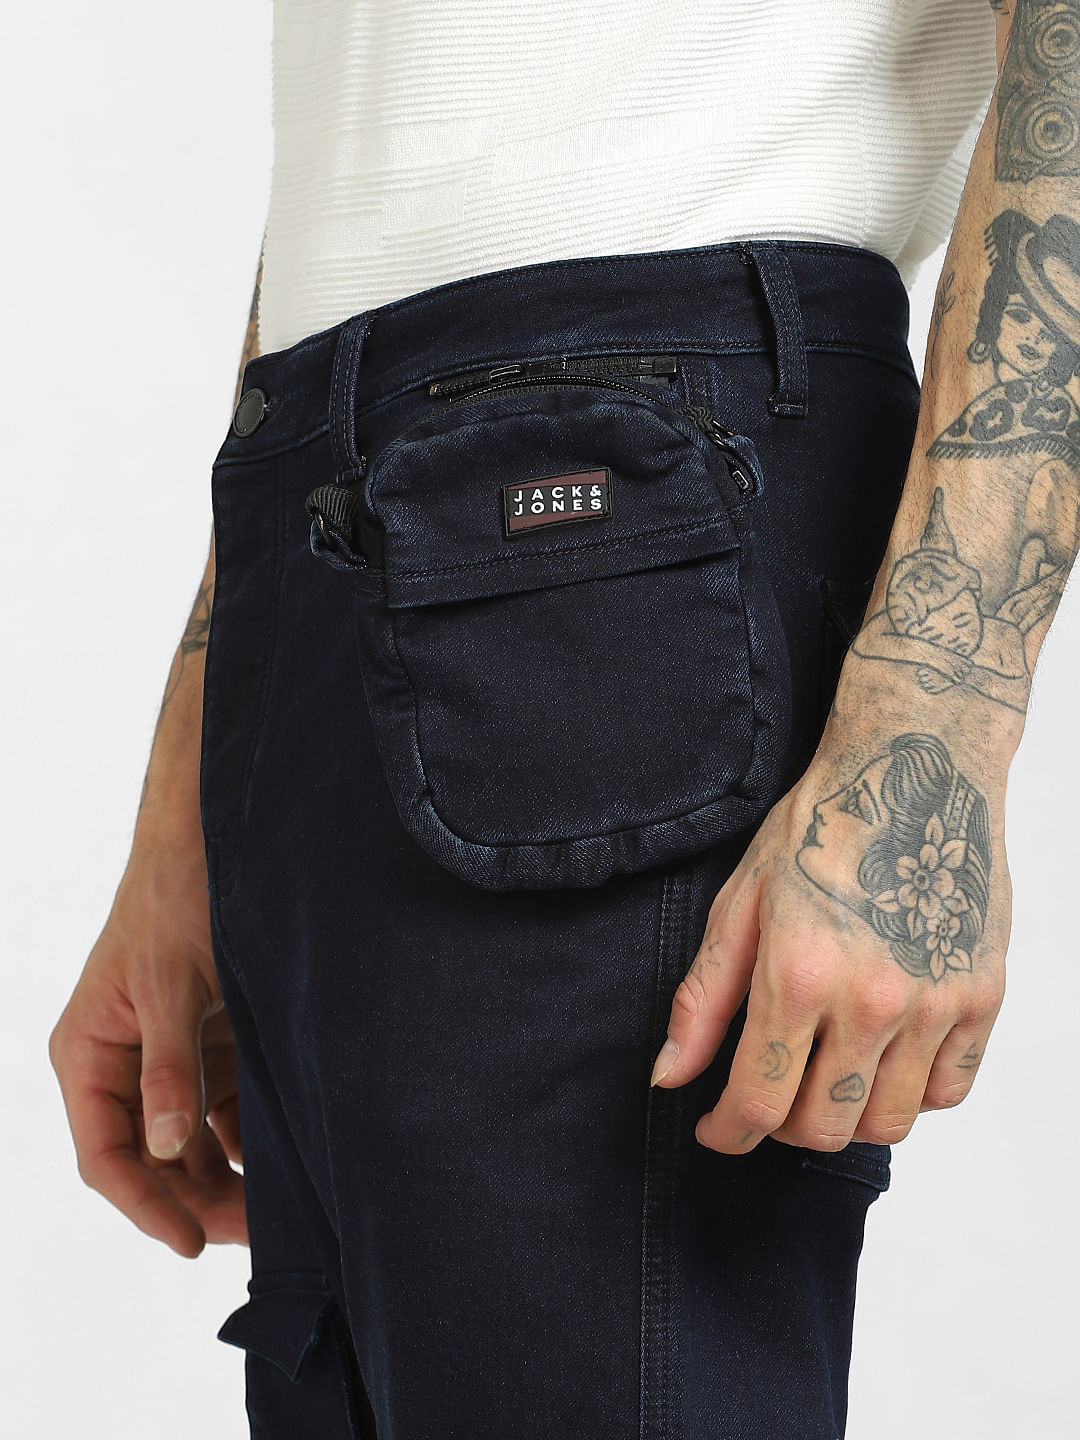 Jack & Jones Mens Glenn Slim-Fit Jeans Denim Stretchy Pants New Faded  Trousers | eBay